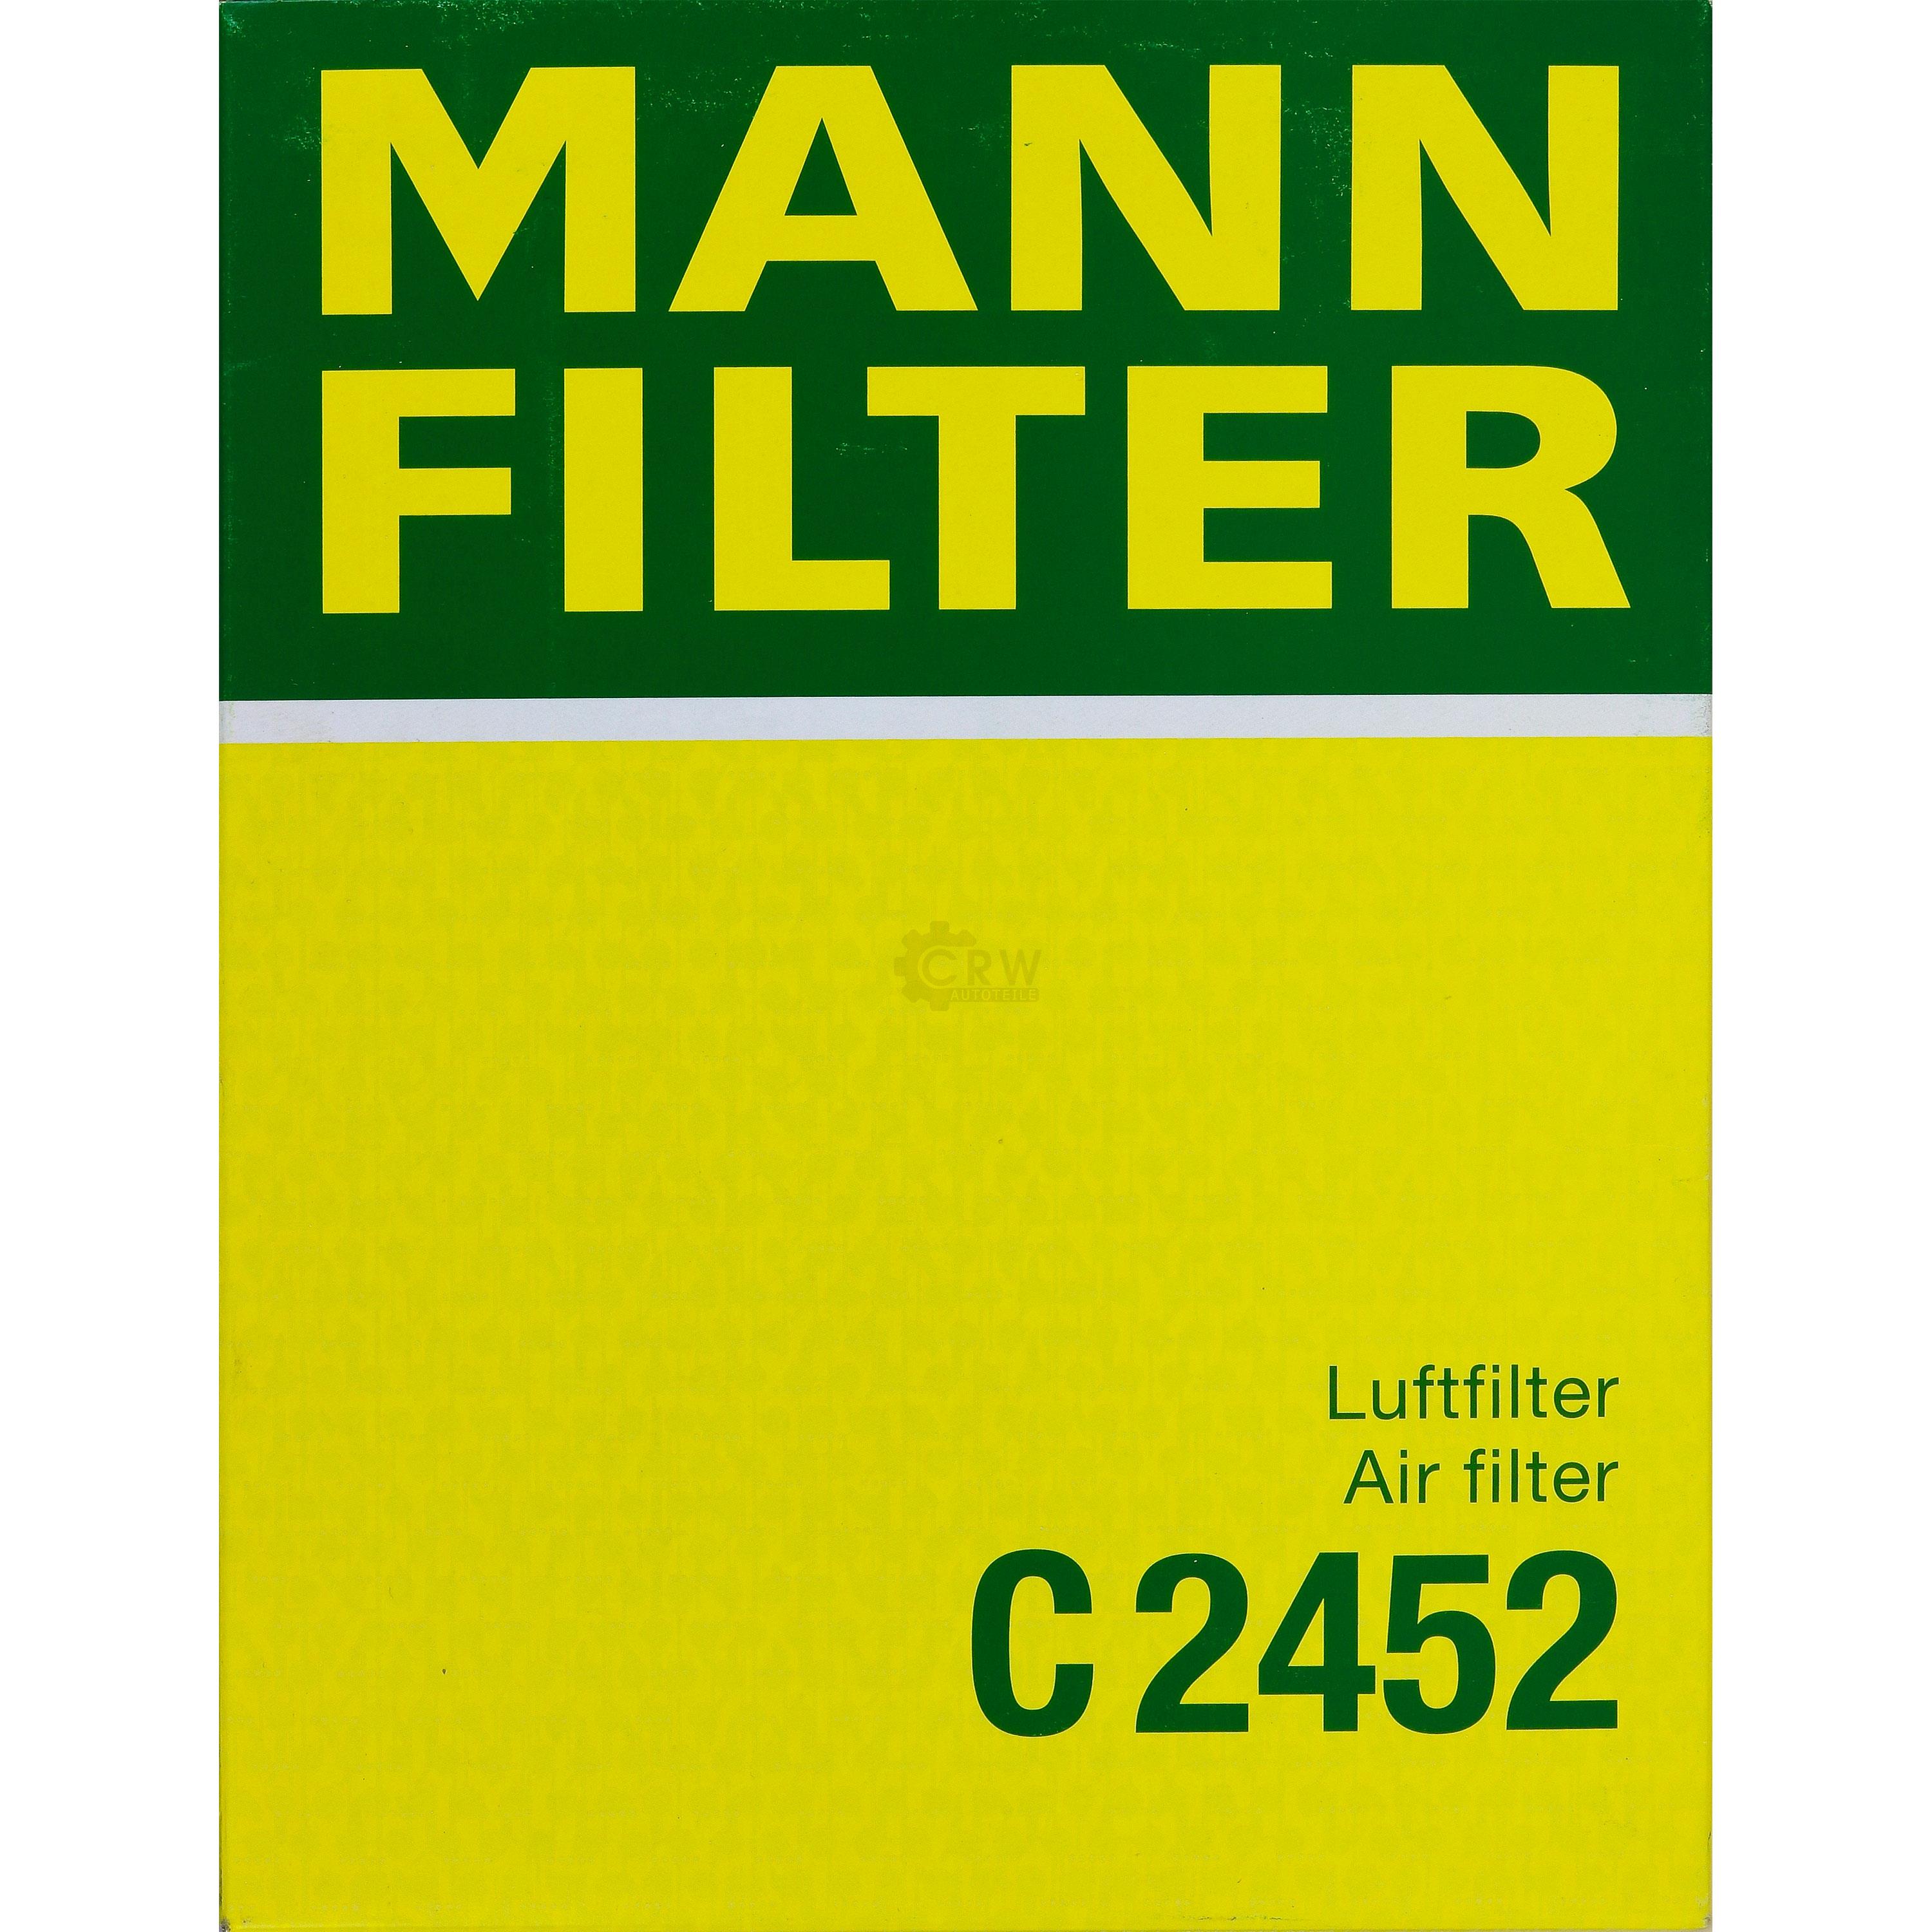 MANN-FILTER Luftfilter für Opel Sintra Cadillac Seville Trans Sport 2U 3.4